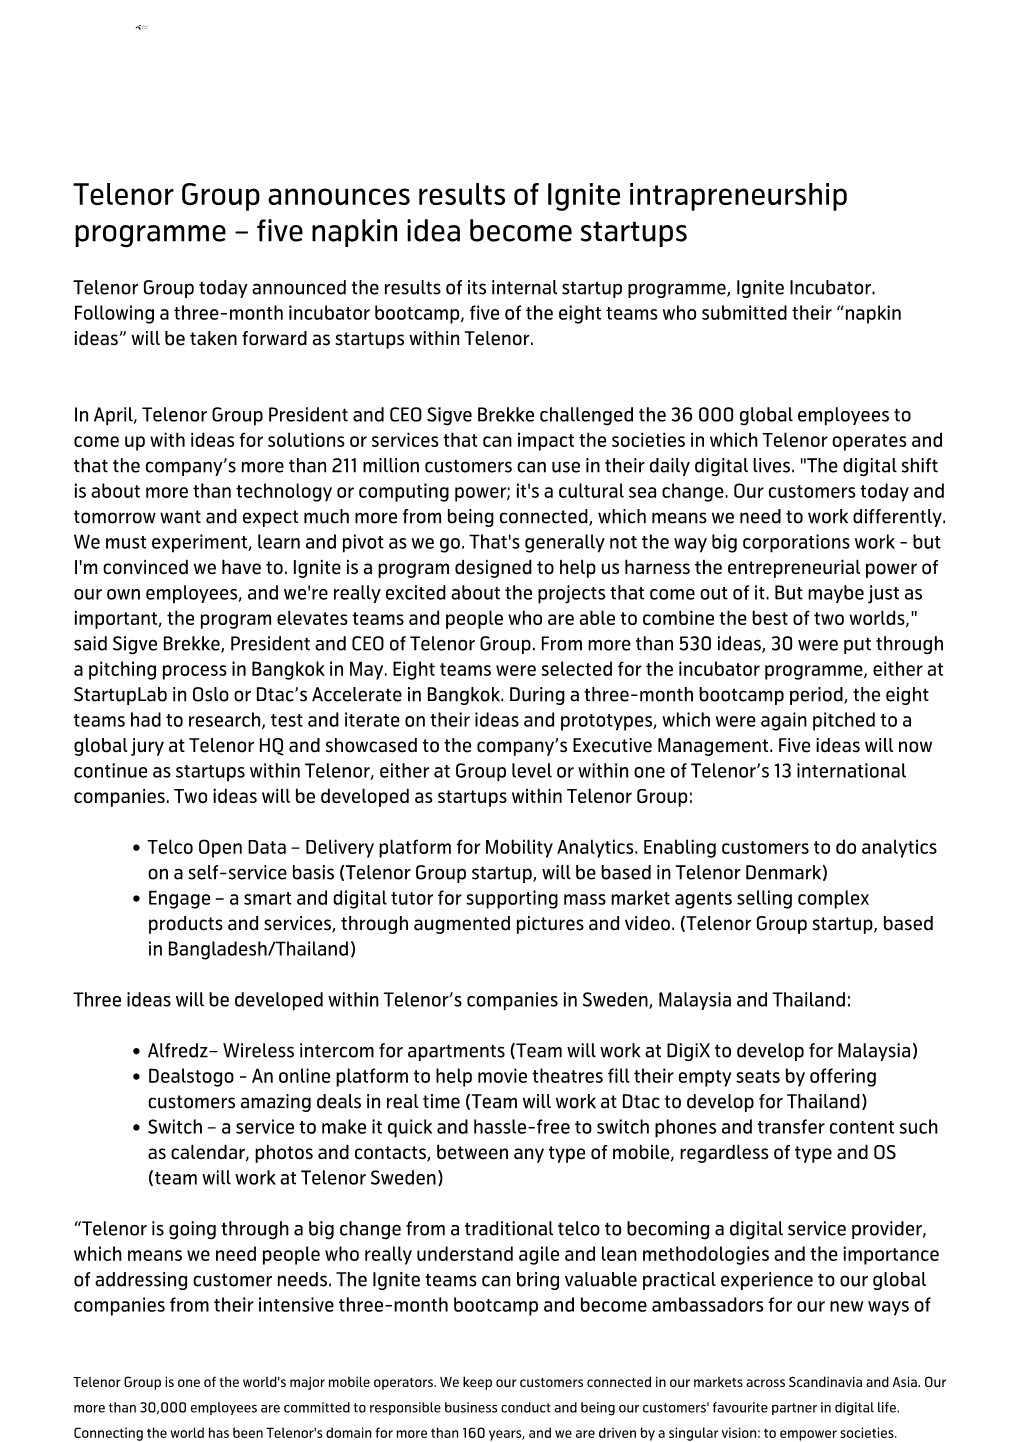 Telenor Group Announces Results of Ignite Intrapreneurship Programme – Five Napkin Idea Become Startups